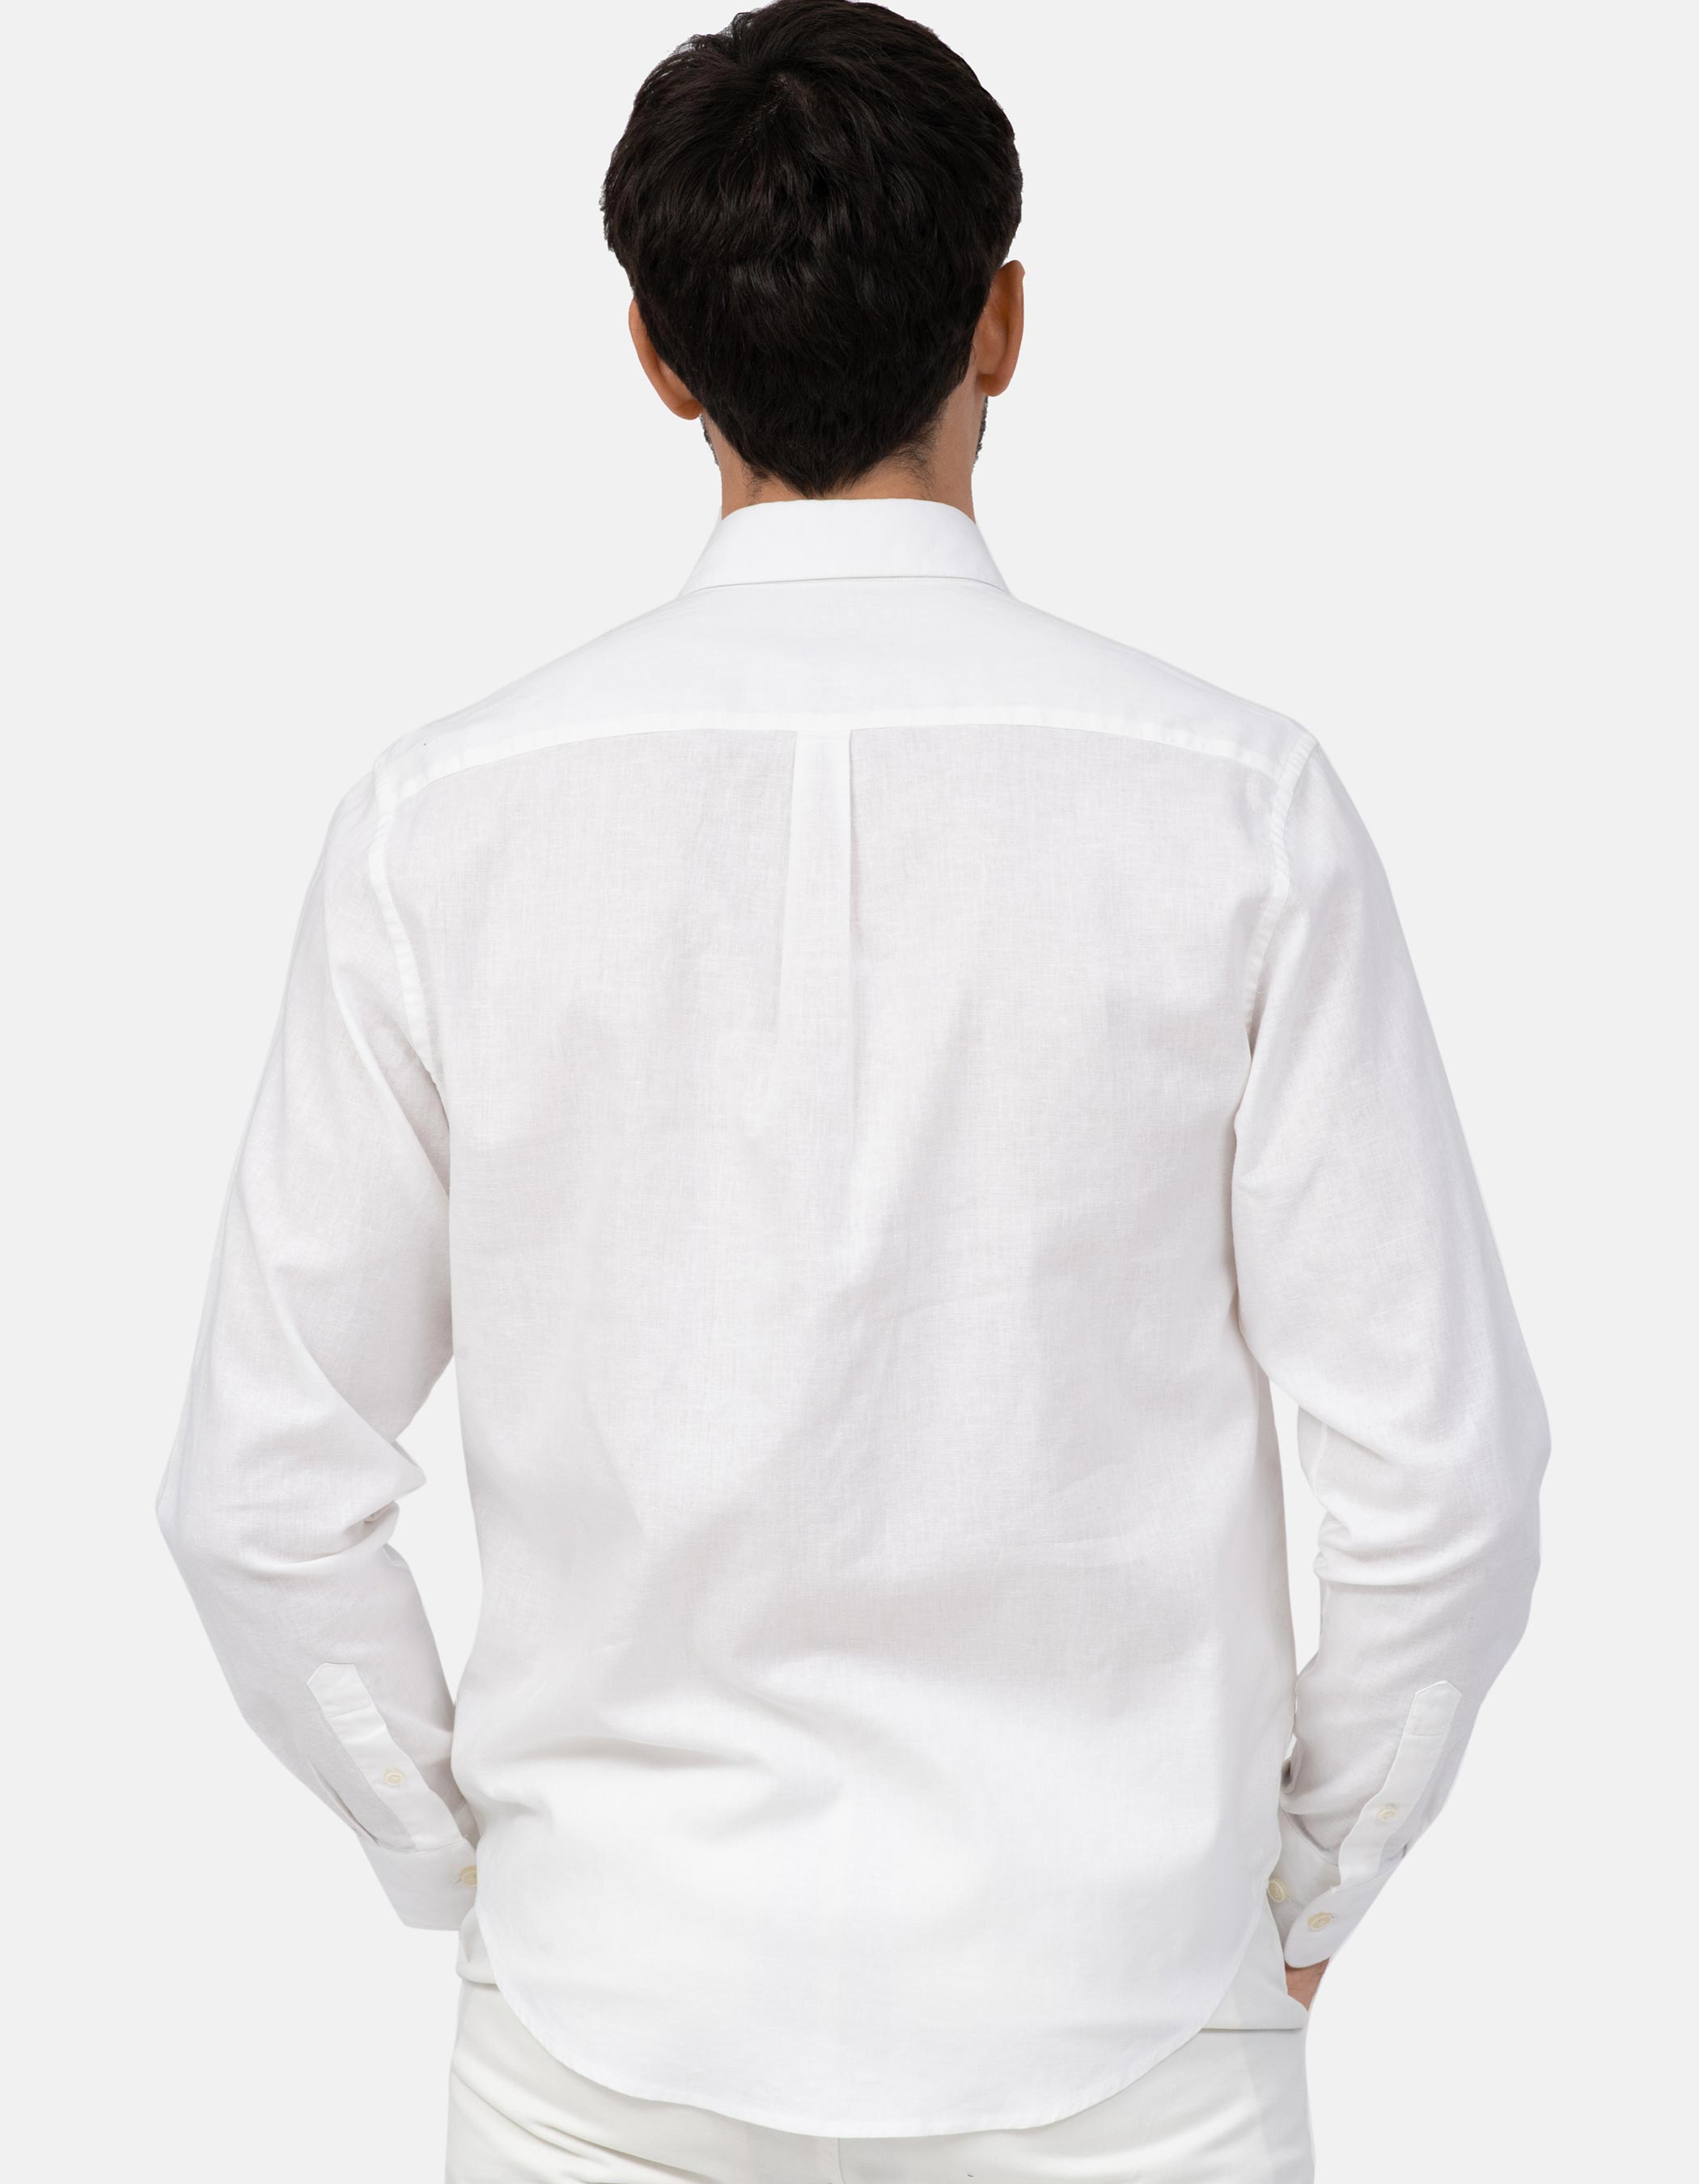 Linen and cotton shirt. 5